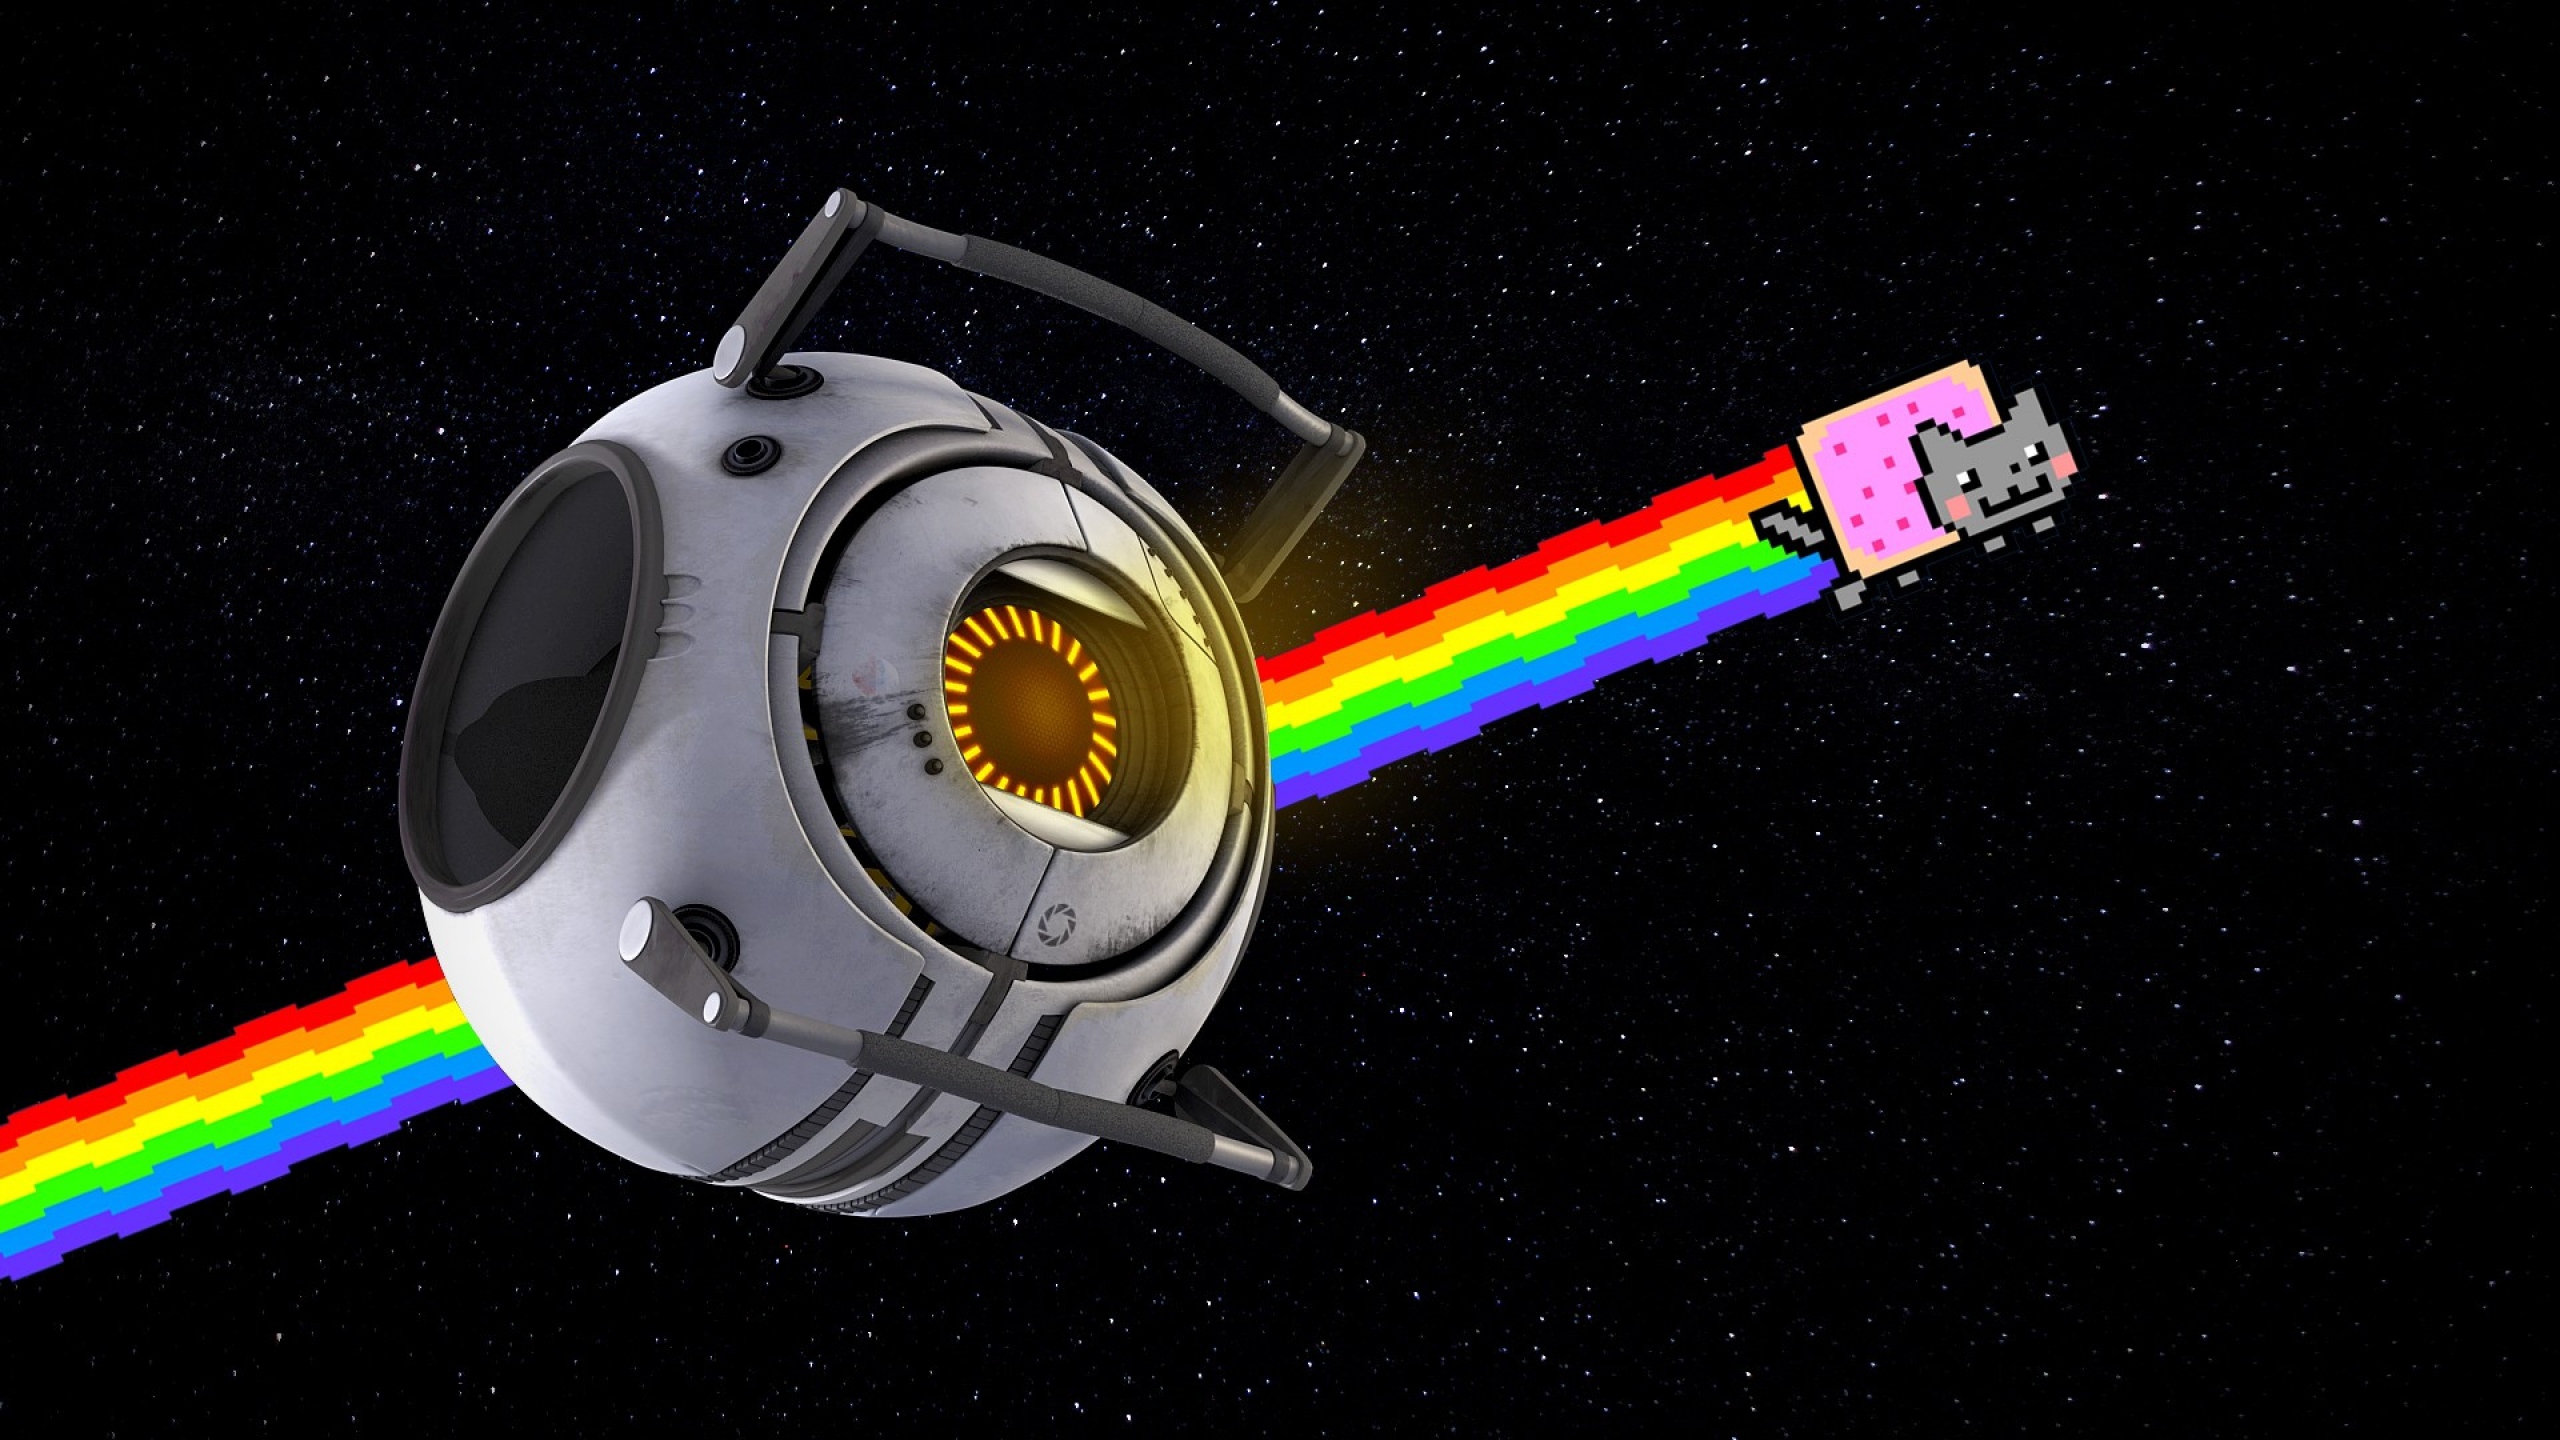 Download Wallpaper 2560x1440 Nyan cat, Rainbow, Positive, Space ...